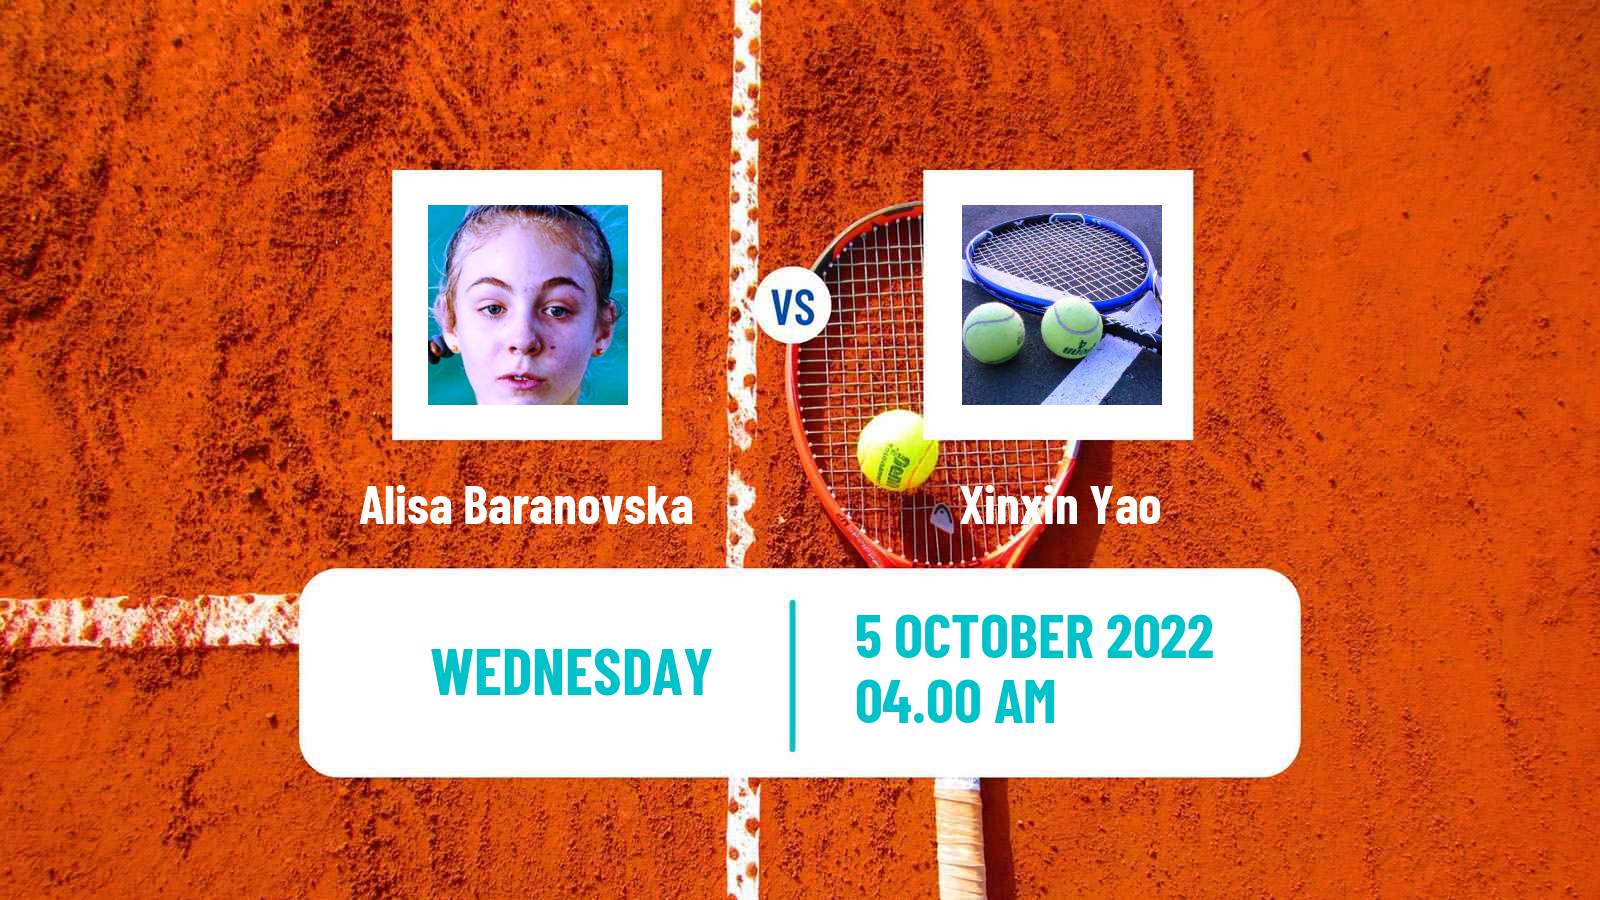 Tennis ITF Tournaments Alisa Baranovska - Xinxin Yao